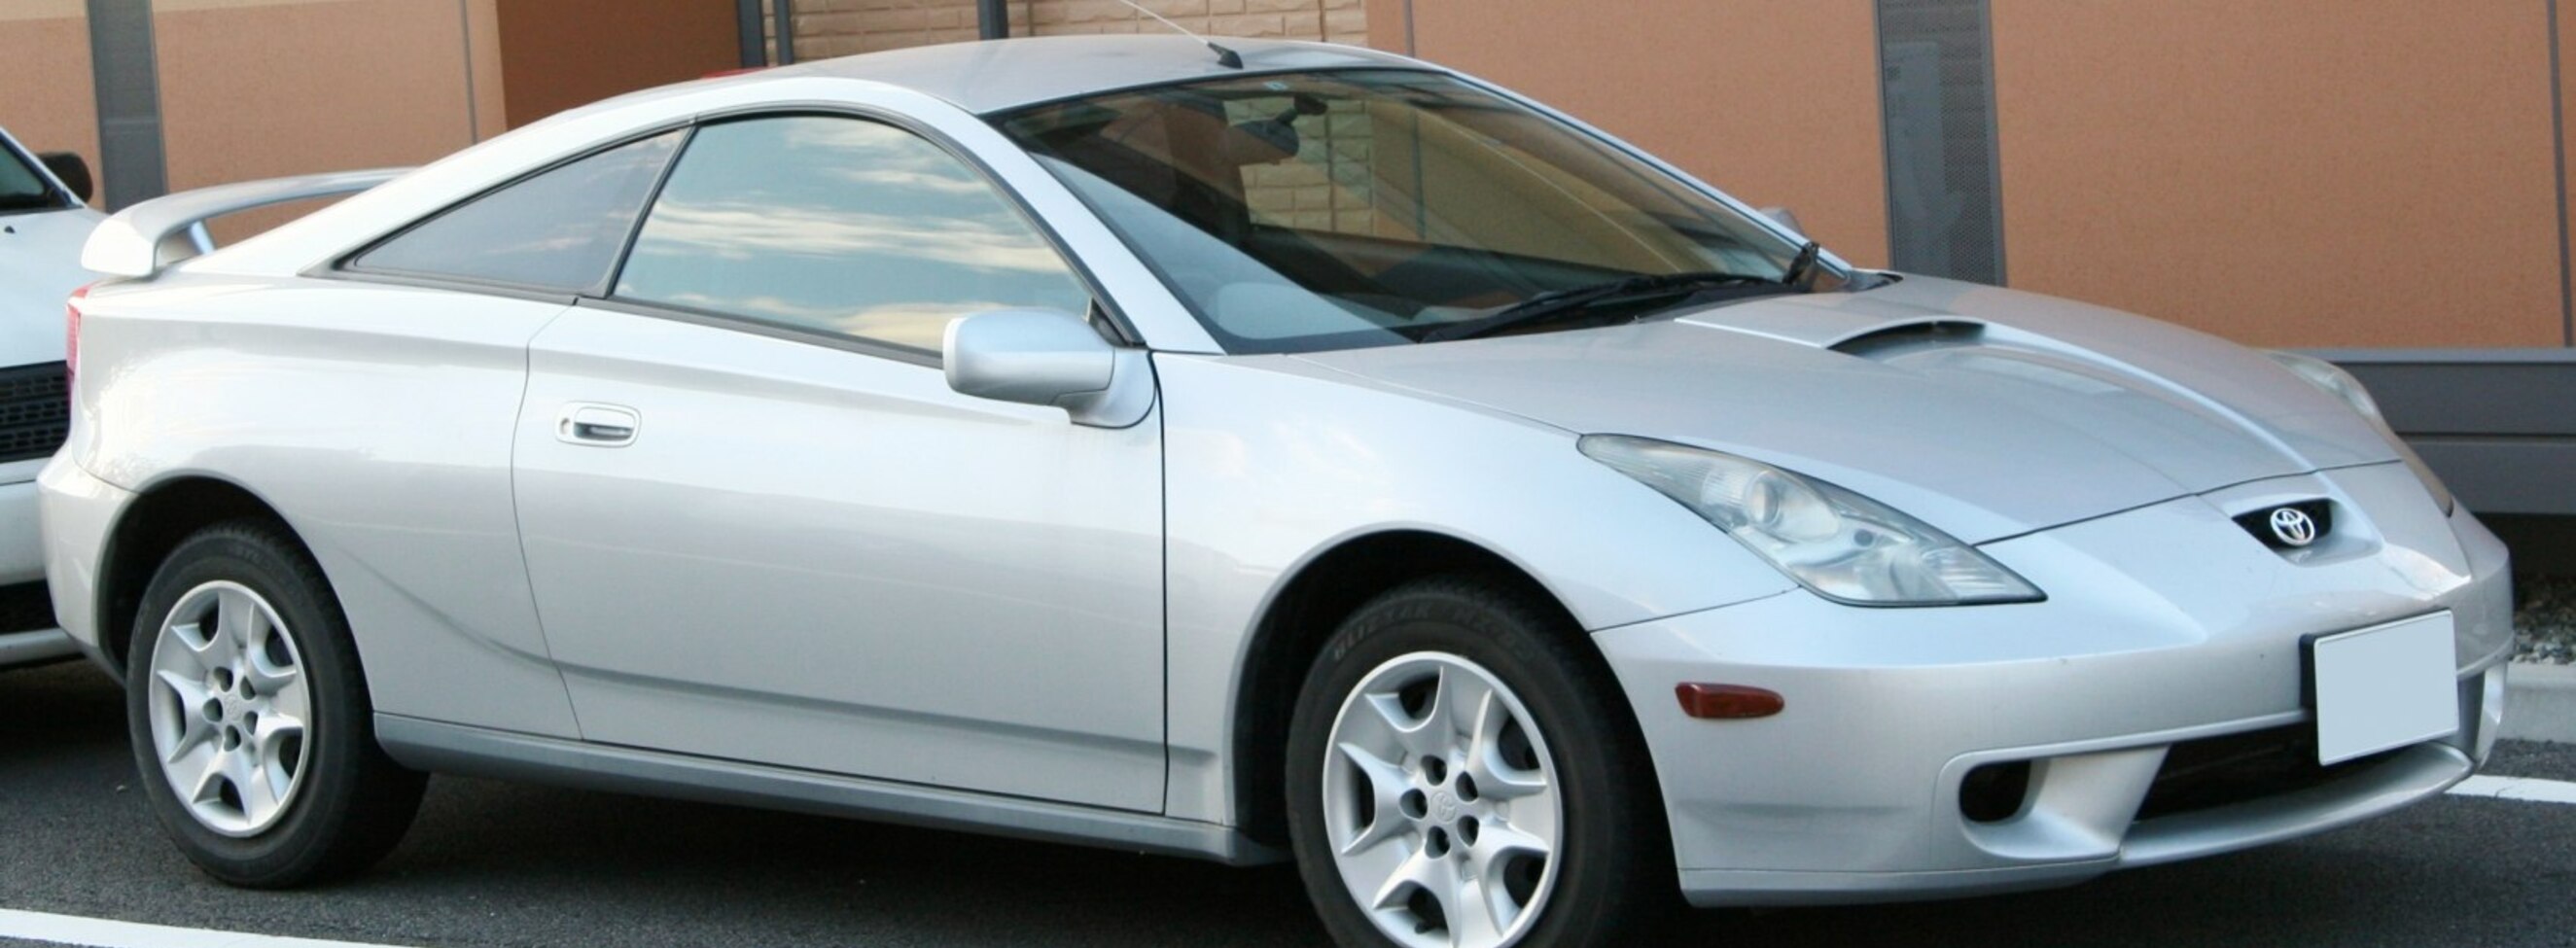 Toyota Celica (T23) 1.8 i GT- R (182 Hp) 1999, 2000, 2001, 2002, 2003, 2004, 2005, 2006 